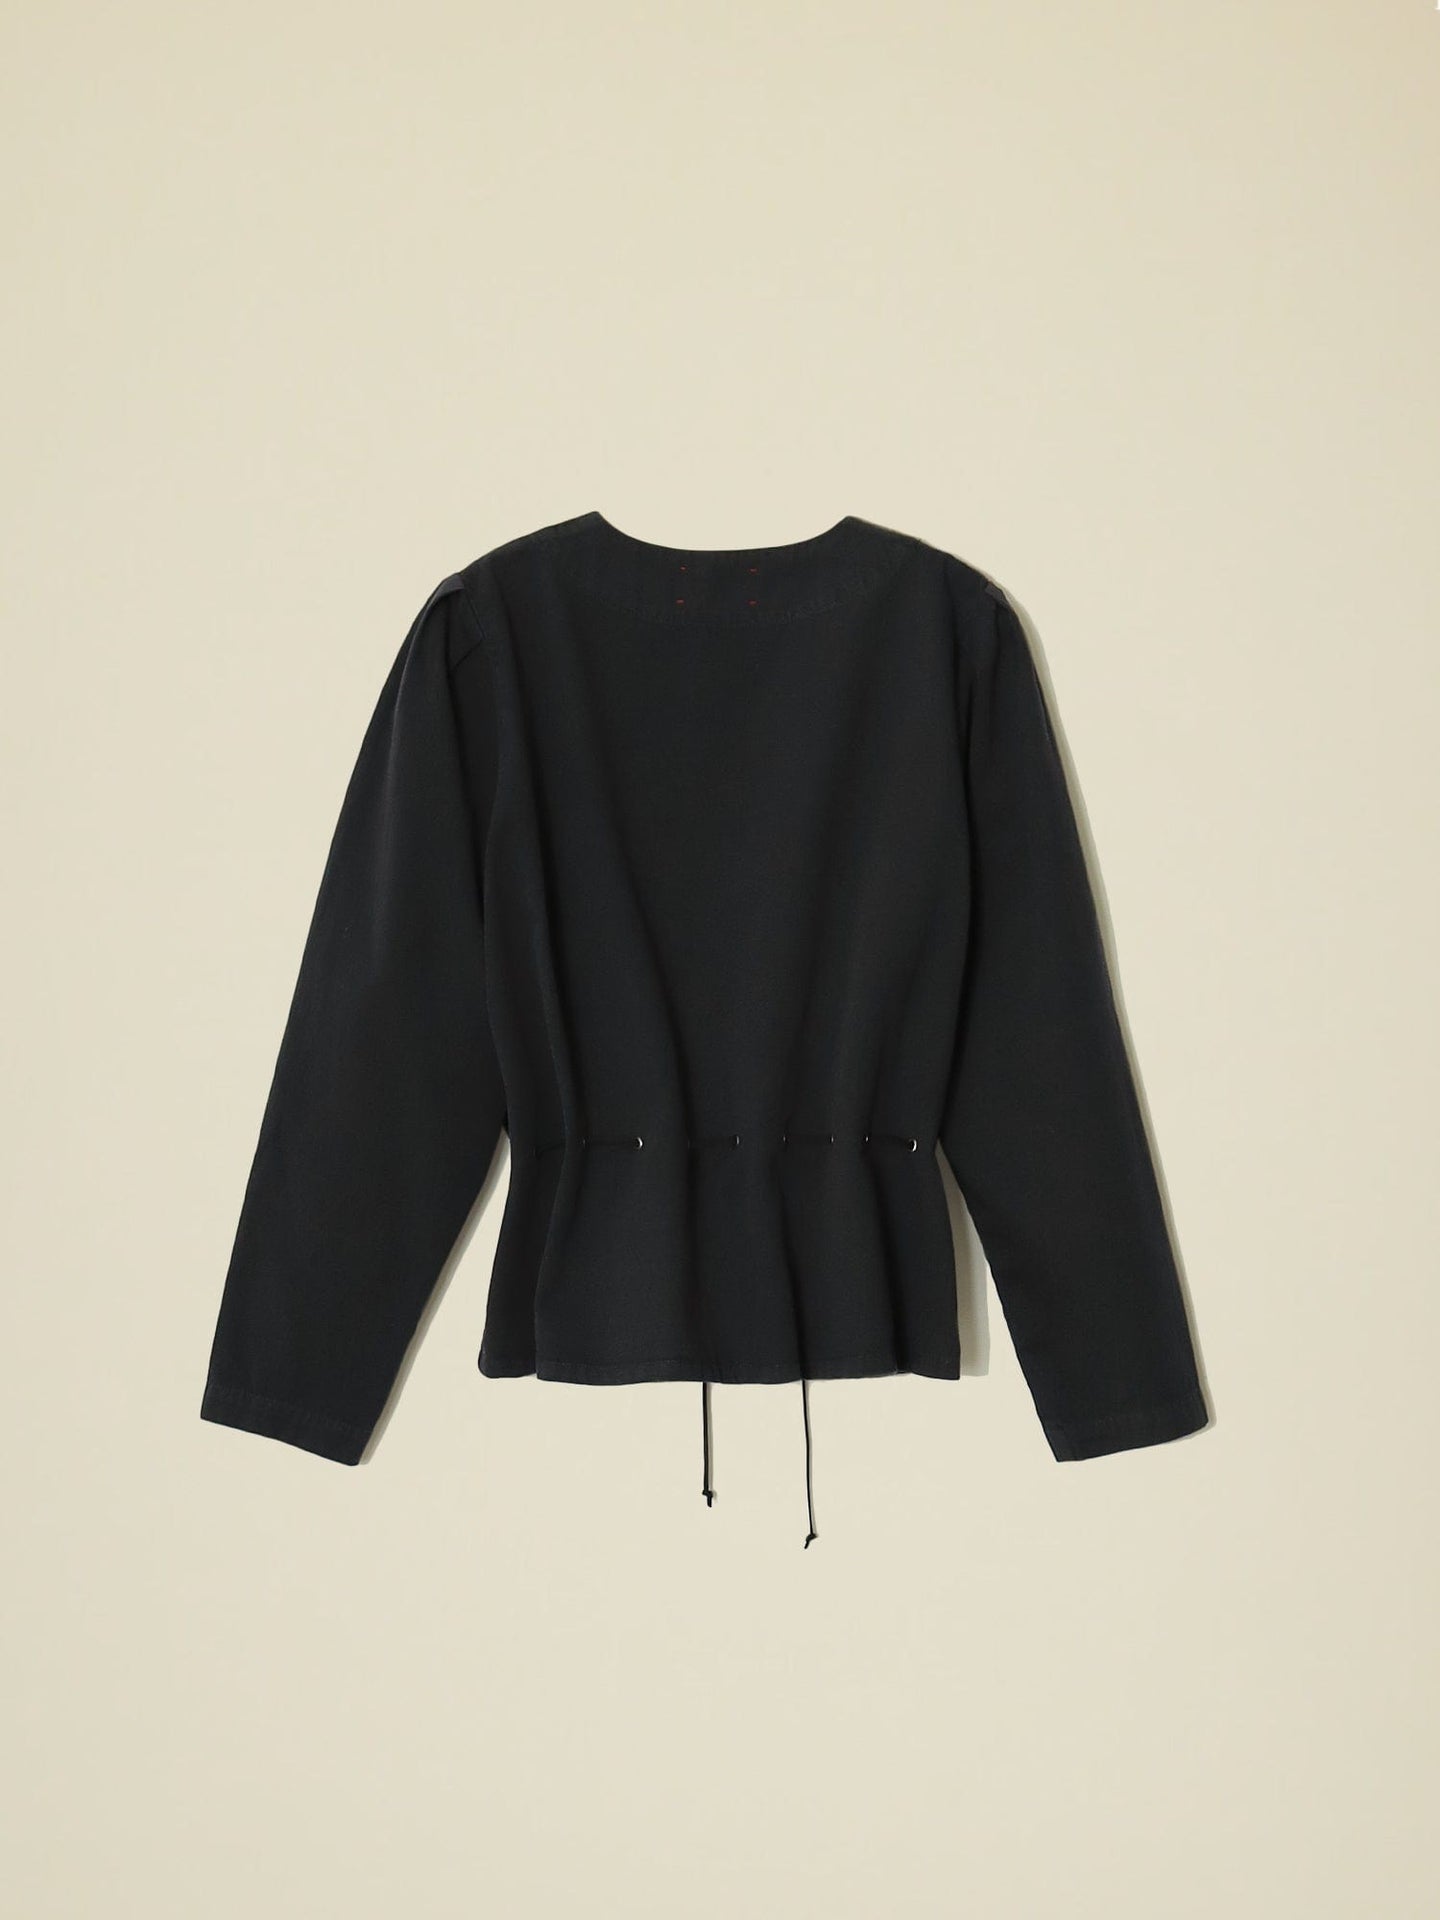 Xirena Jacket Vintage Black Sullivan Jacket